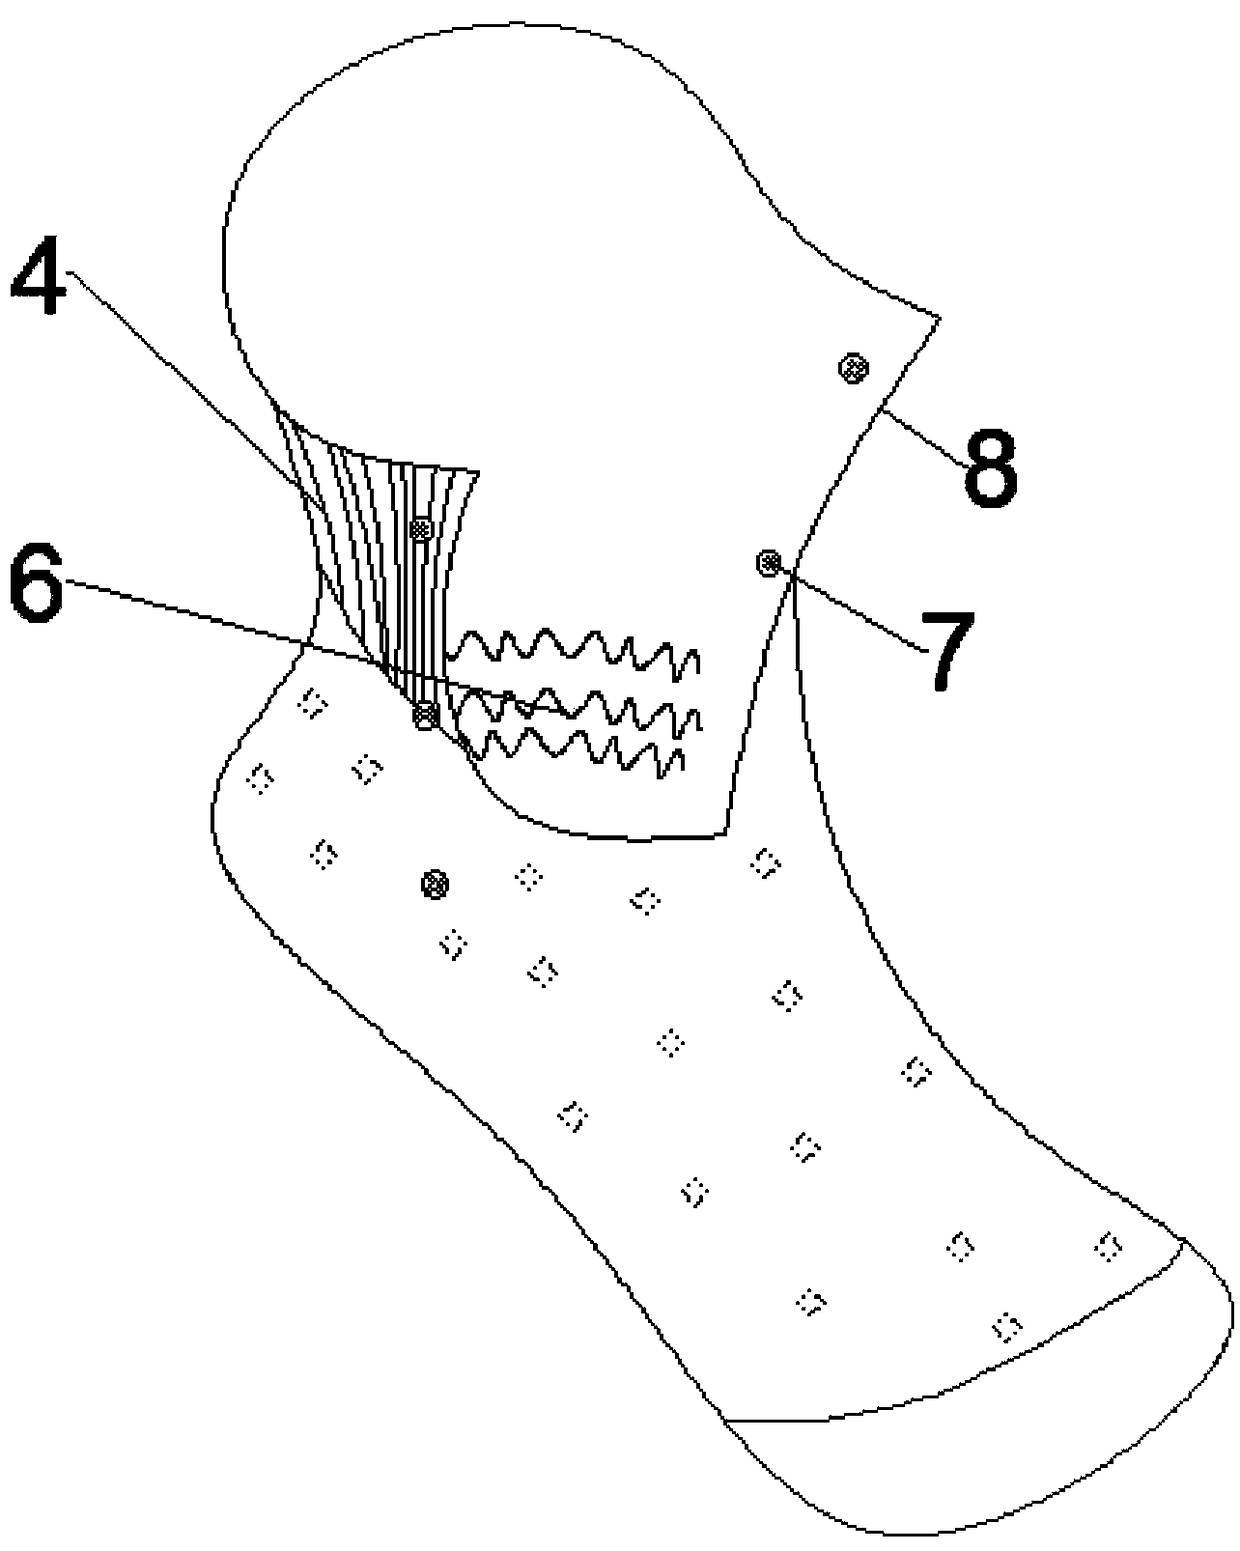 Antibacterial and moisture-retention socks capable of preventing cracking